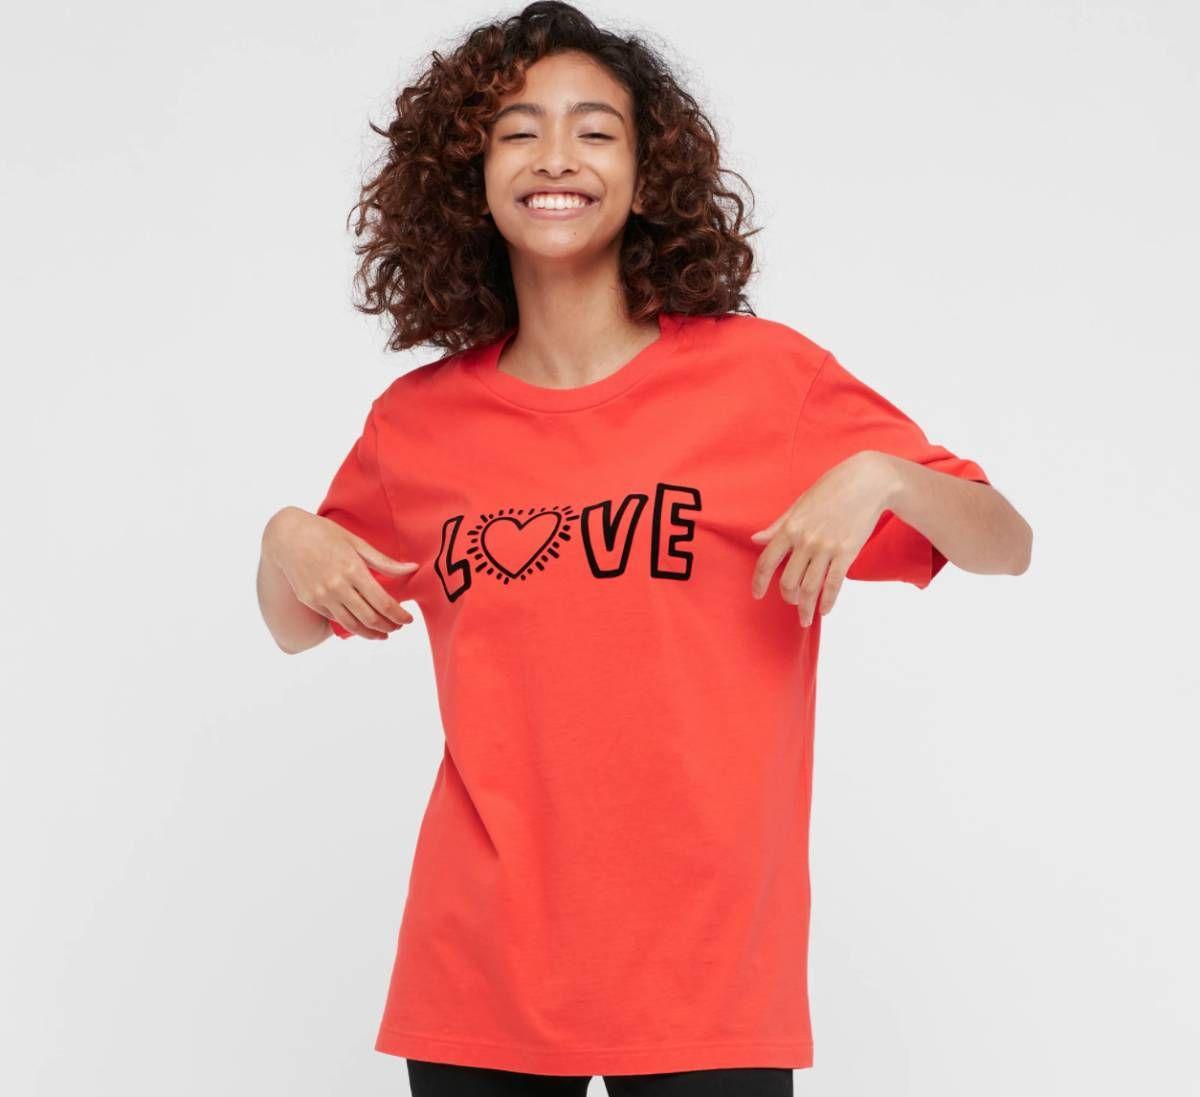 Camiseta de Uniqlo con dibujo 'Love' estampado